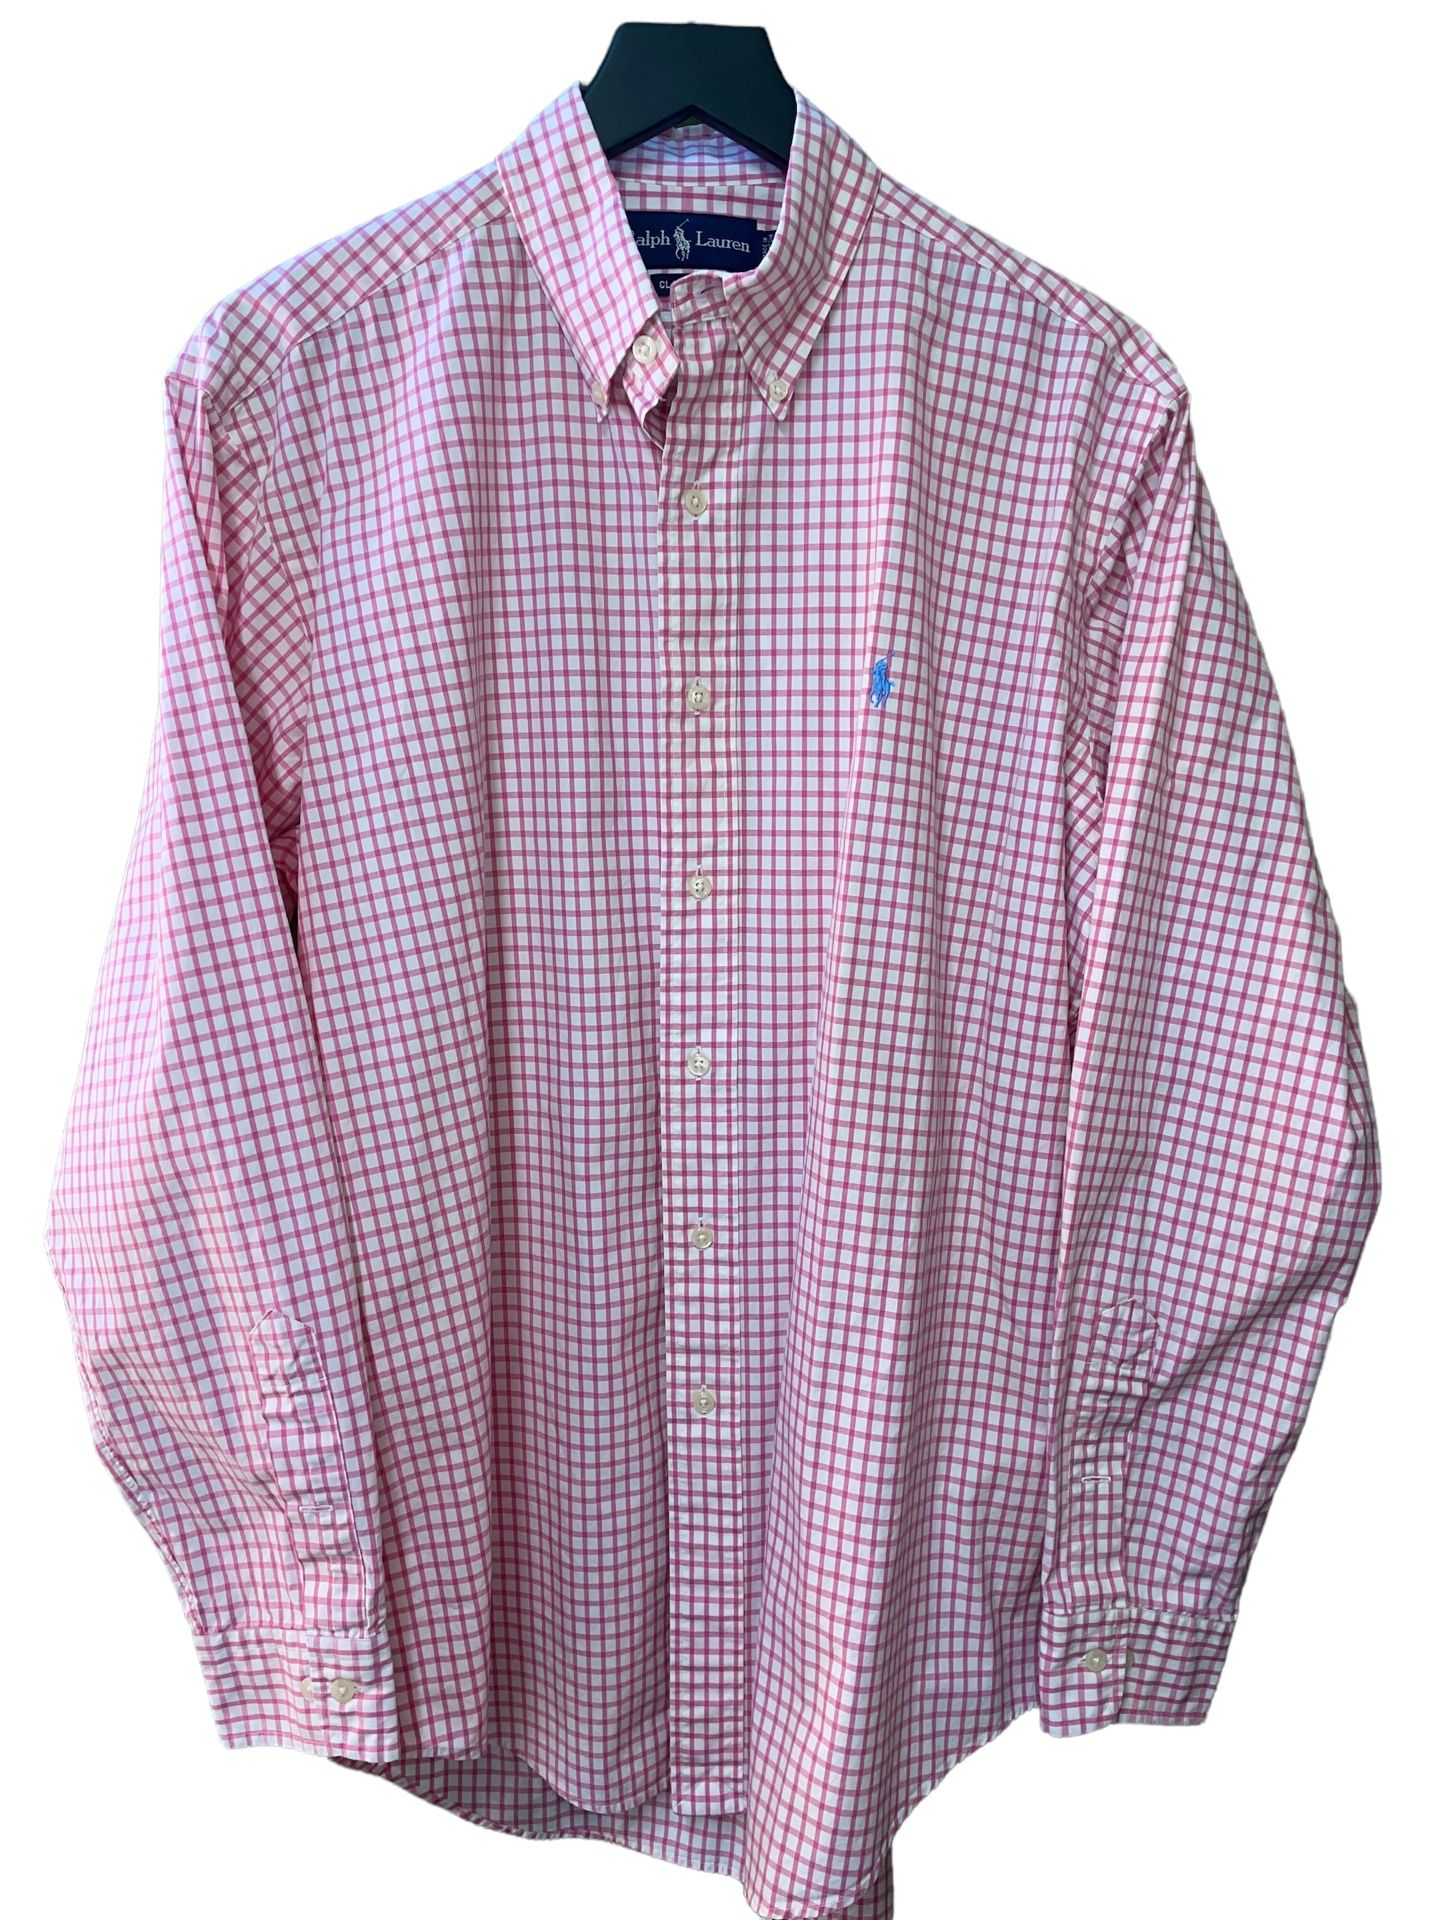 Ralph Lauren Classic Fit Shirt Long Sleeve Pink Plaid Button Down Size M 15 1/2.